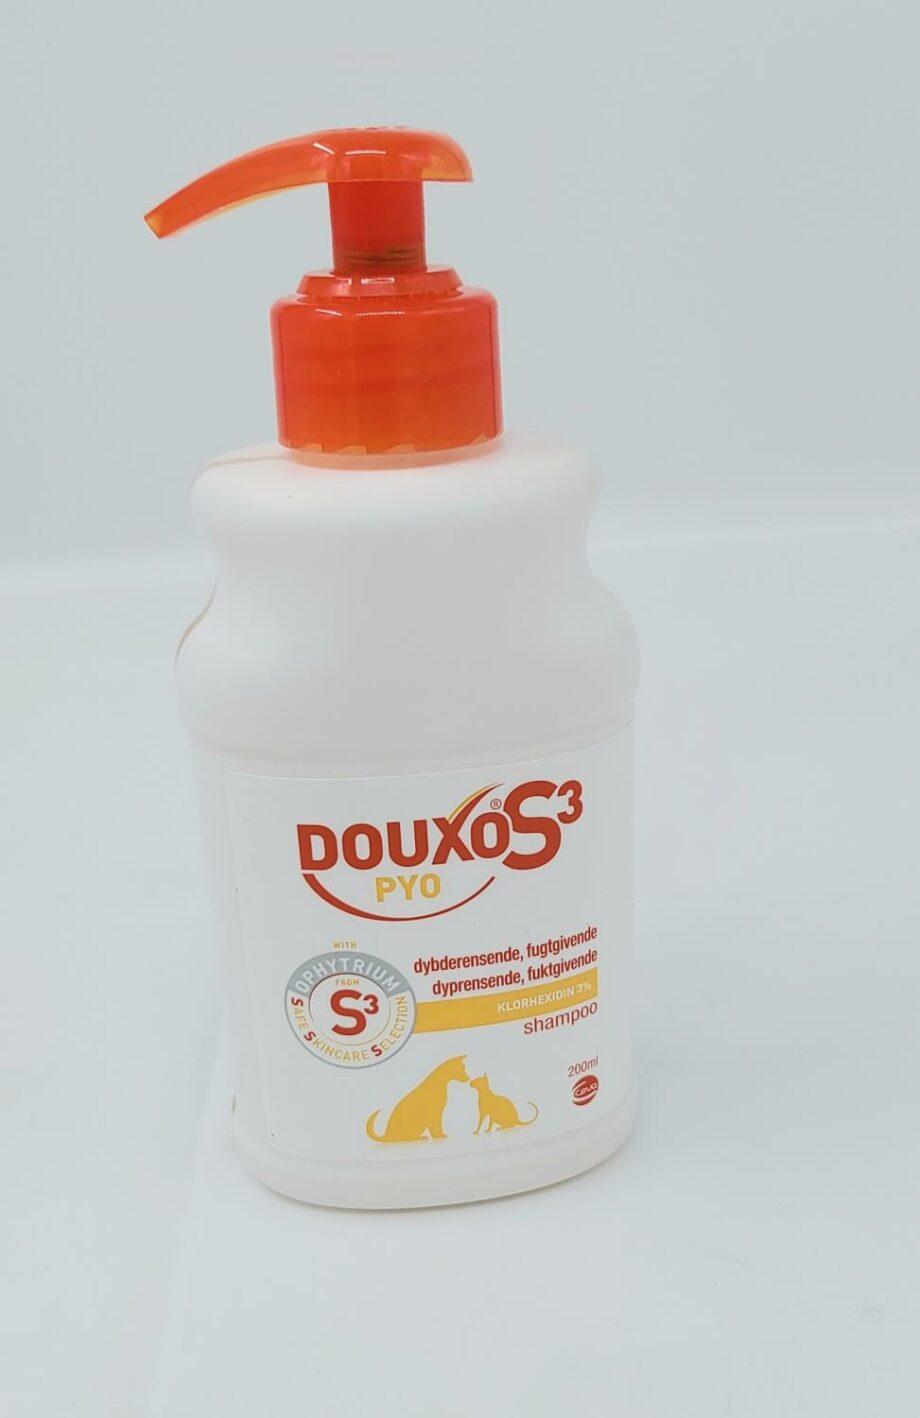 2051 64490 920x1418 - DuoxoS3 dyprensende, fuktgivende shampo, 200 ml.